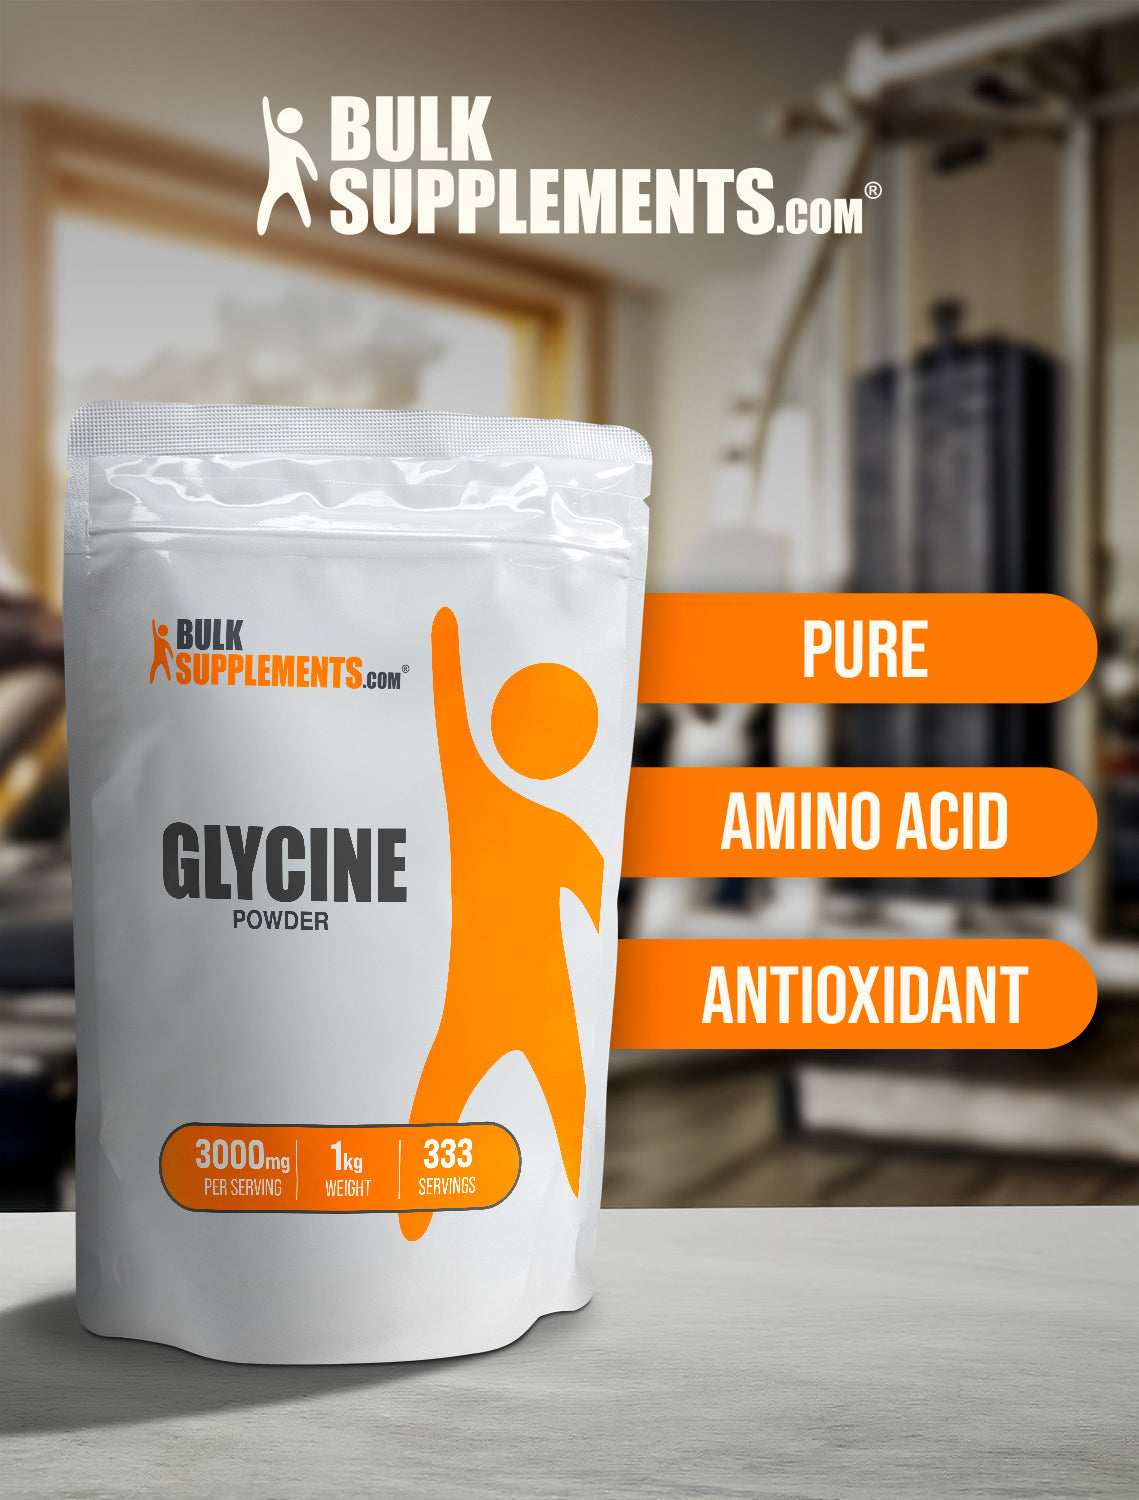 Glycine powder 1kg keywords image